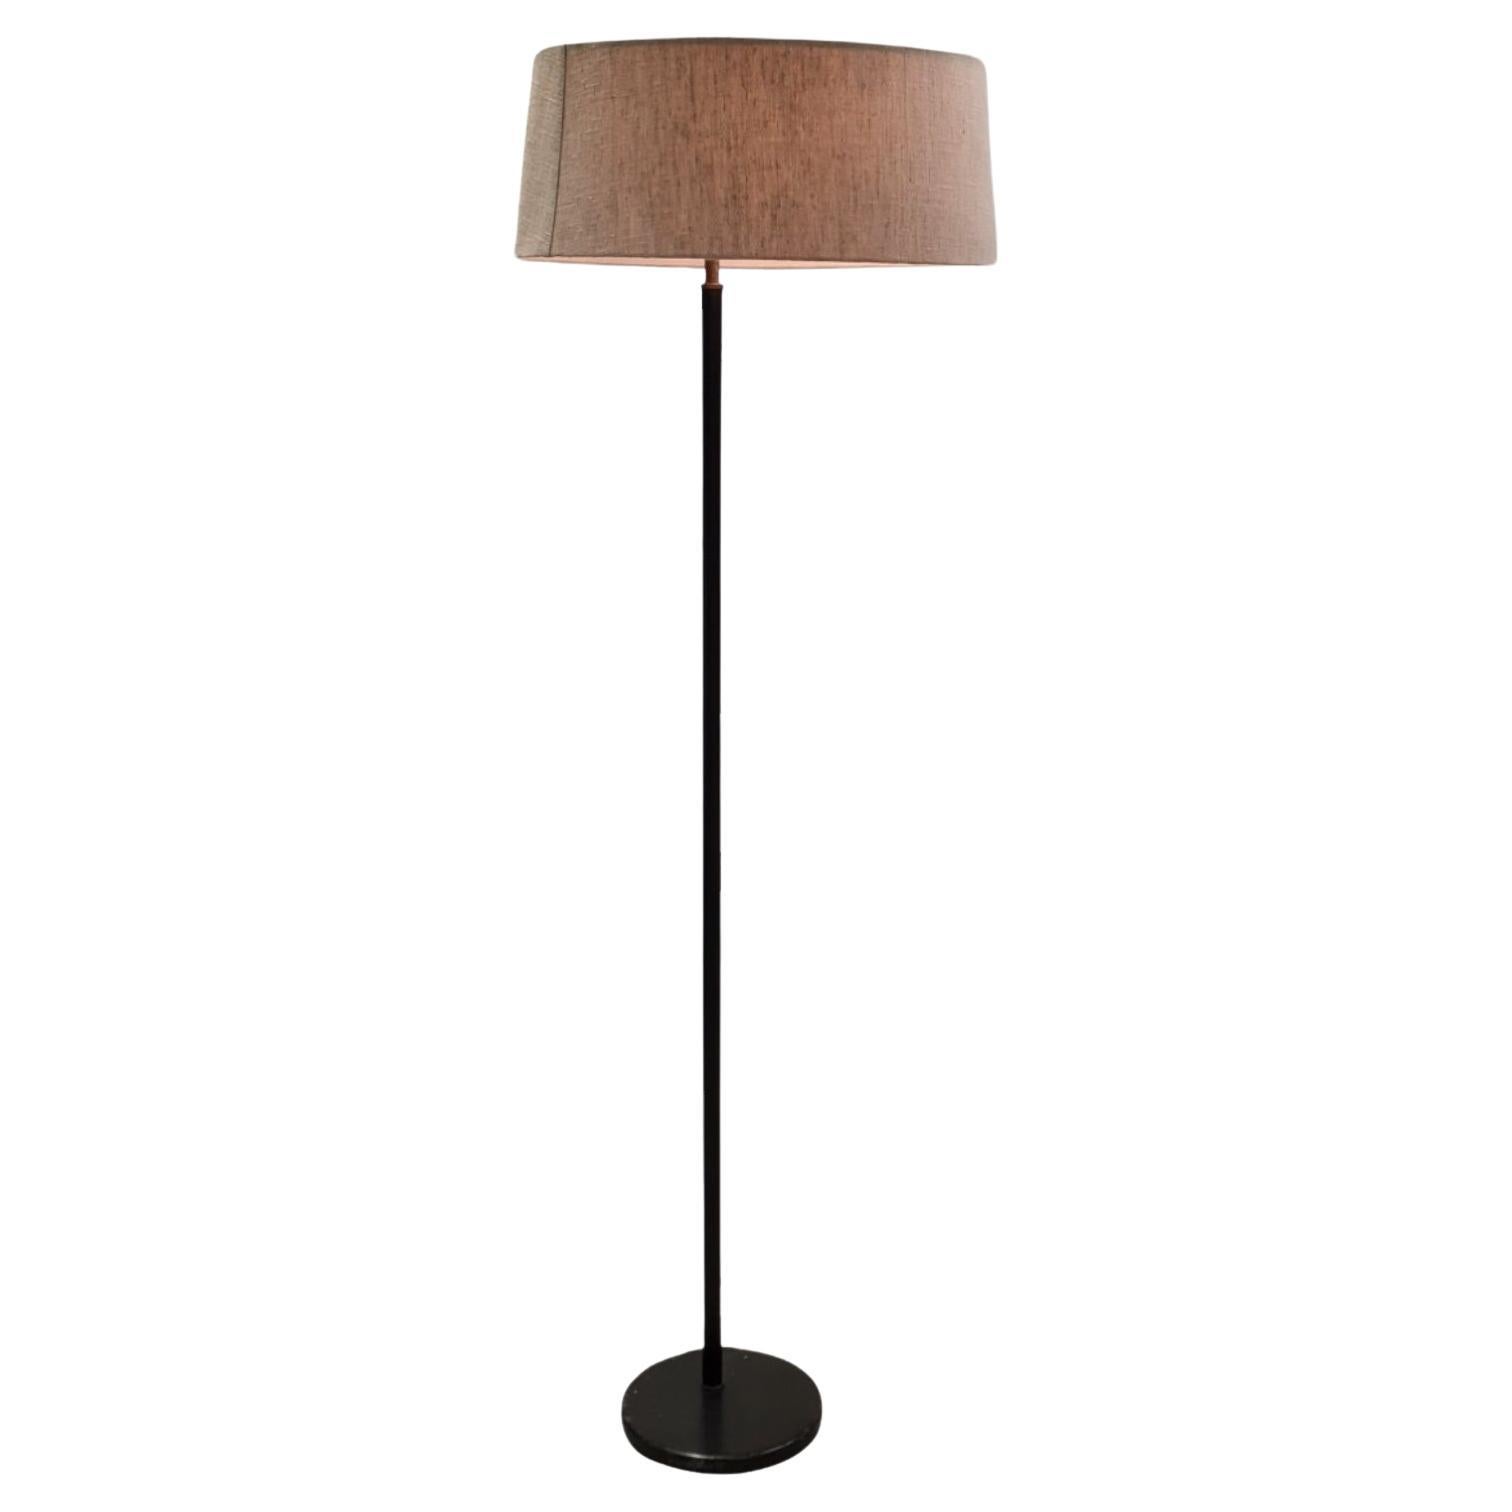 Maija Heikinheimo Floor Lamp MH801, Valaistustyö for Artek 1950s For Sale